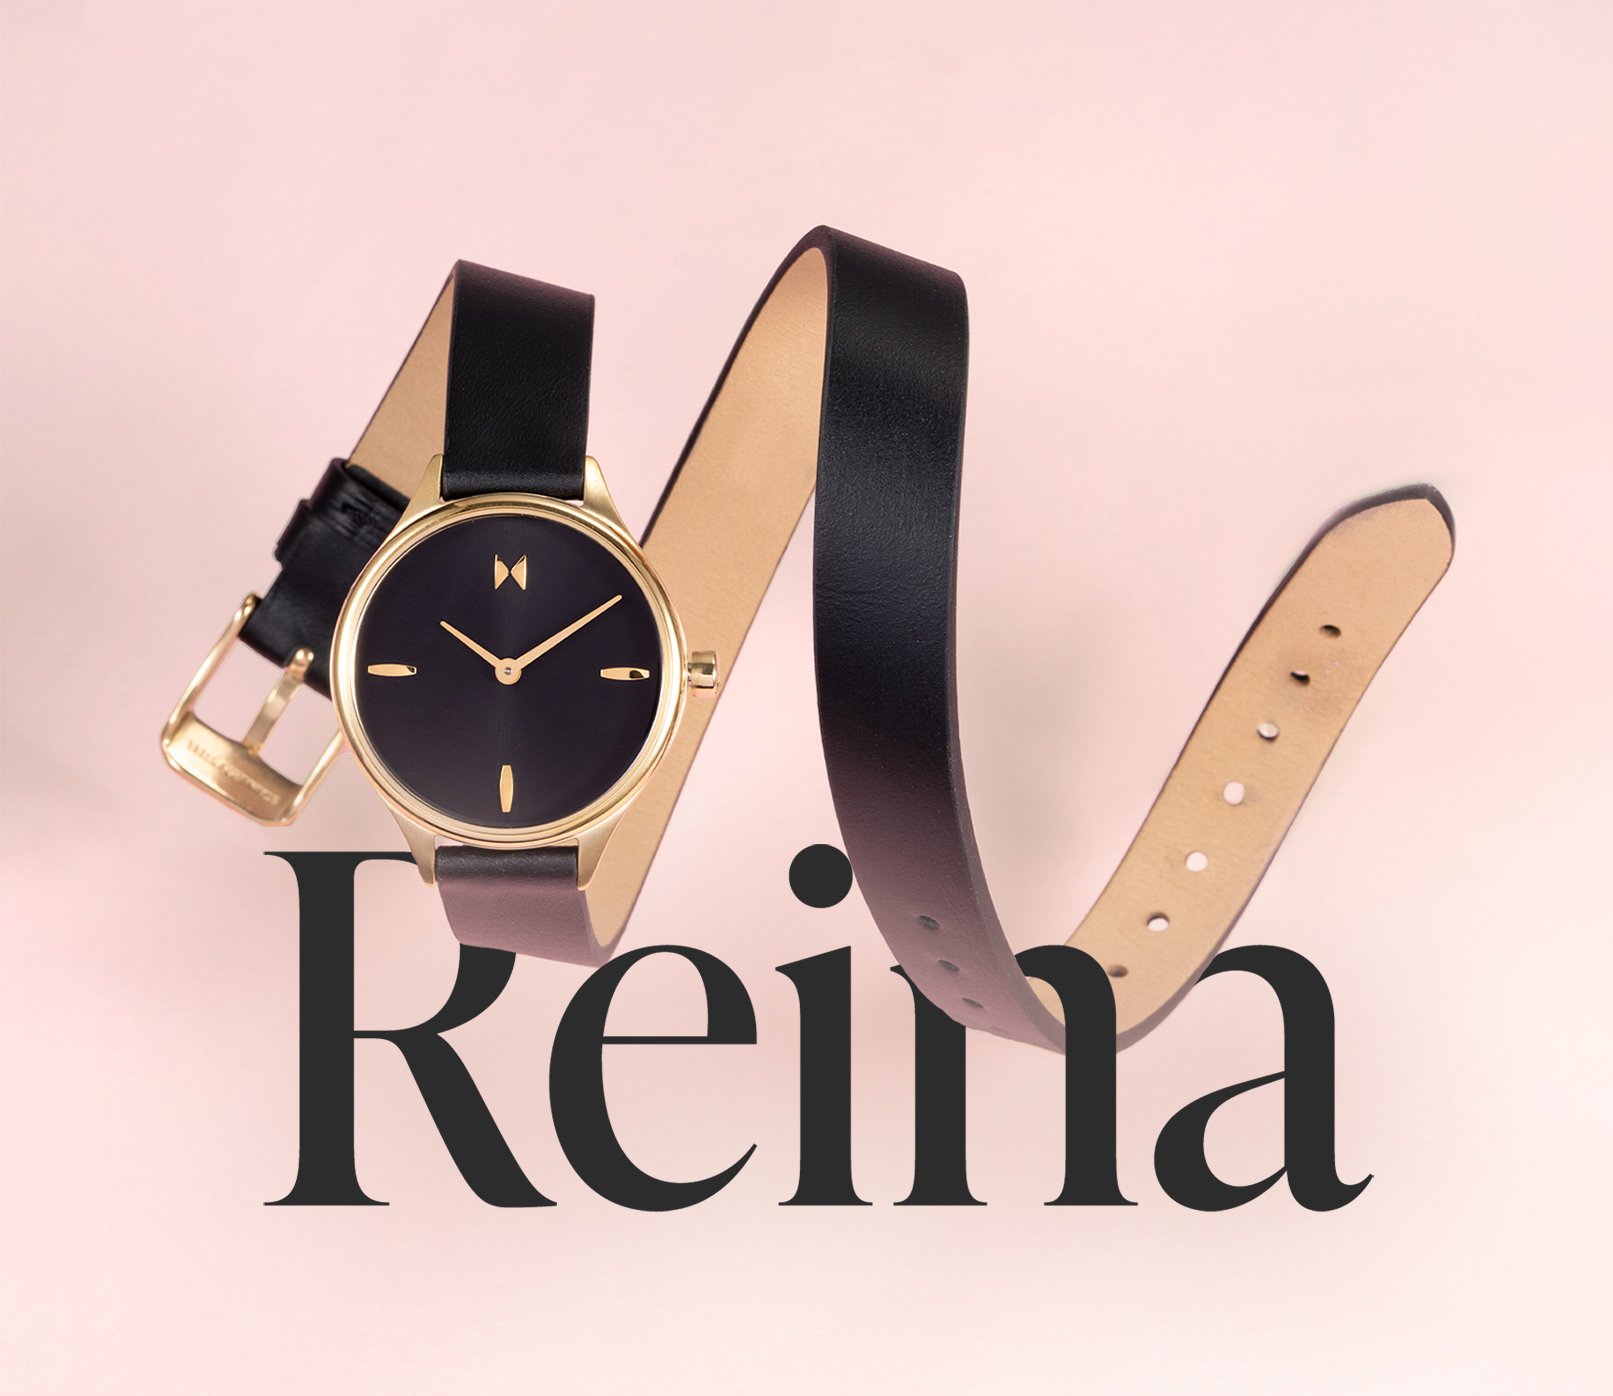 MVMT Reina Leather watch with black strap